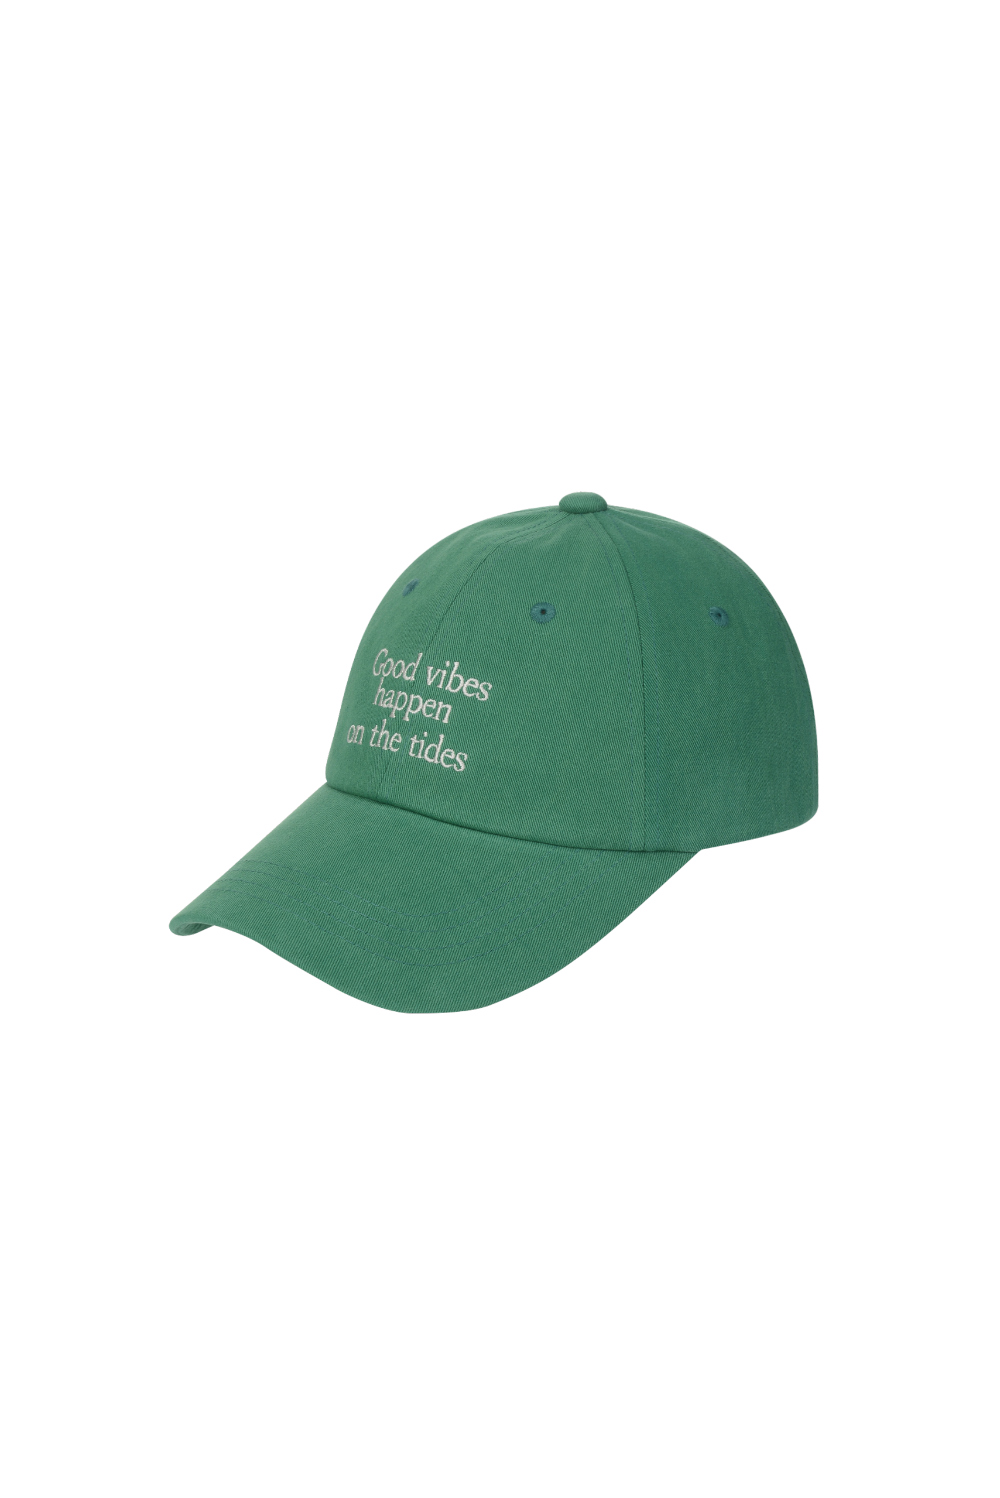 hat green color image-S1L40